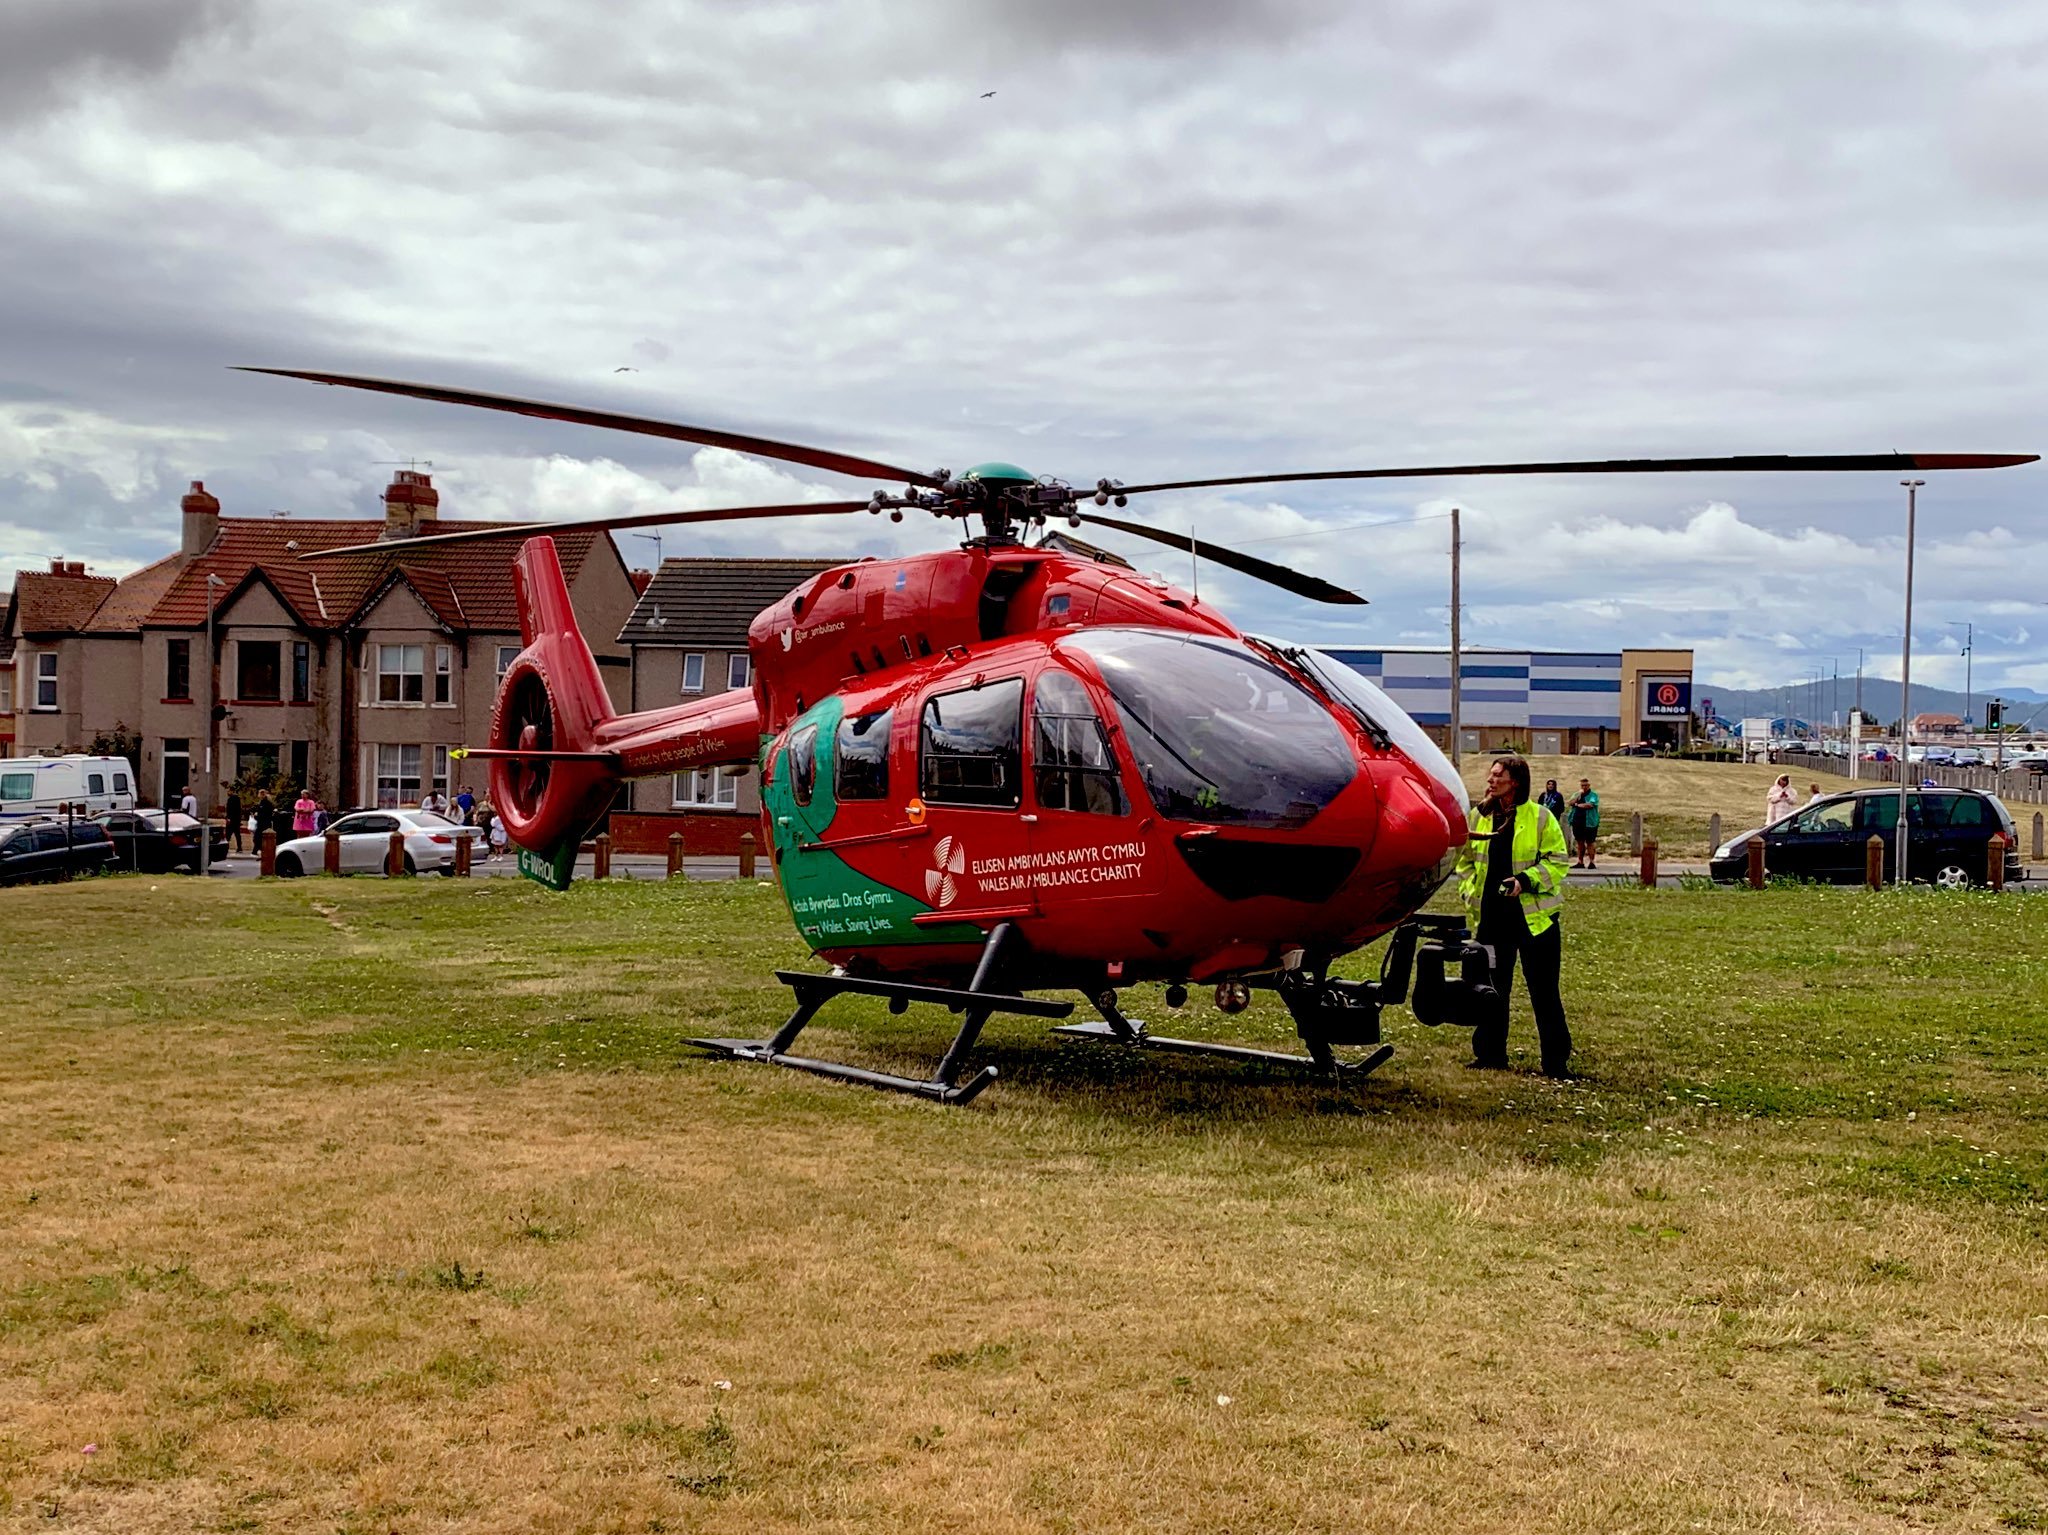 A Wales Air Ambulance lands in Rhyl. Photo: Kit Morgan